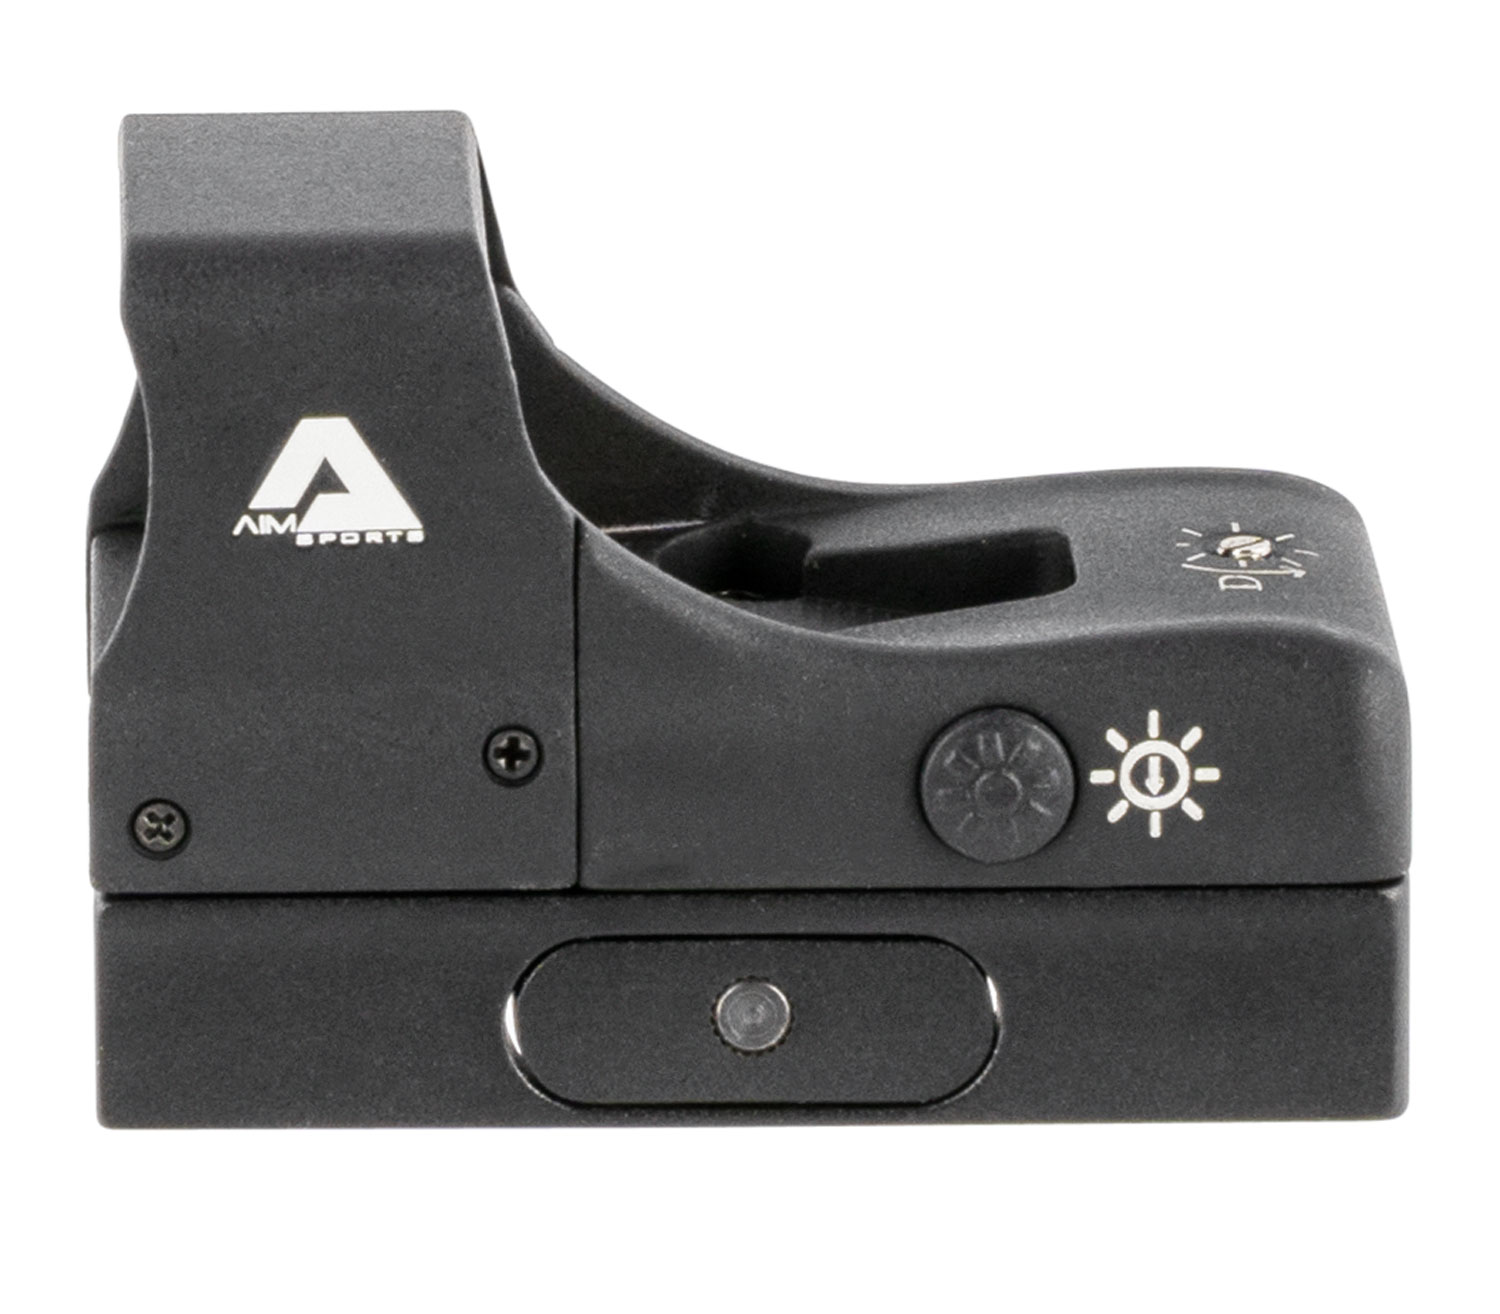 Aim Sports RT5C1 Reflex Compact Matte Black 1x27mm 3.5 MOA Illuminated Red Dot Reticle